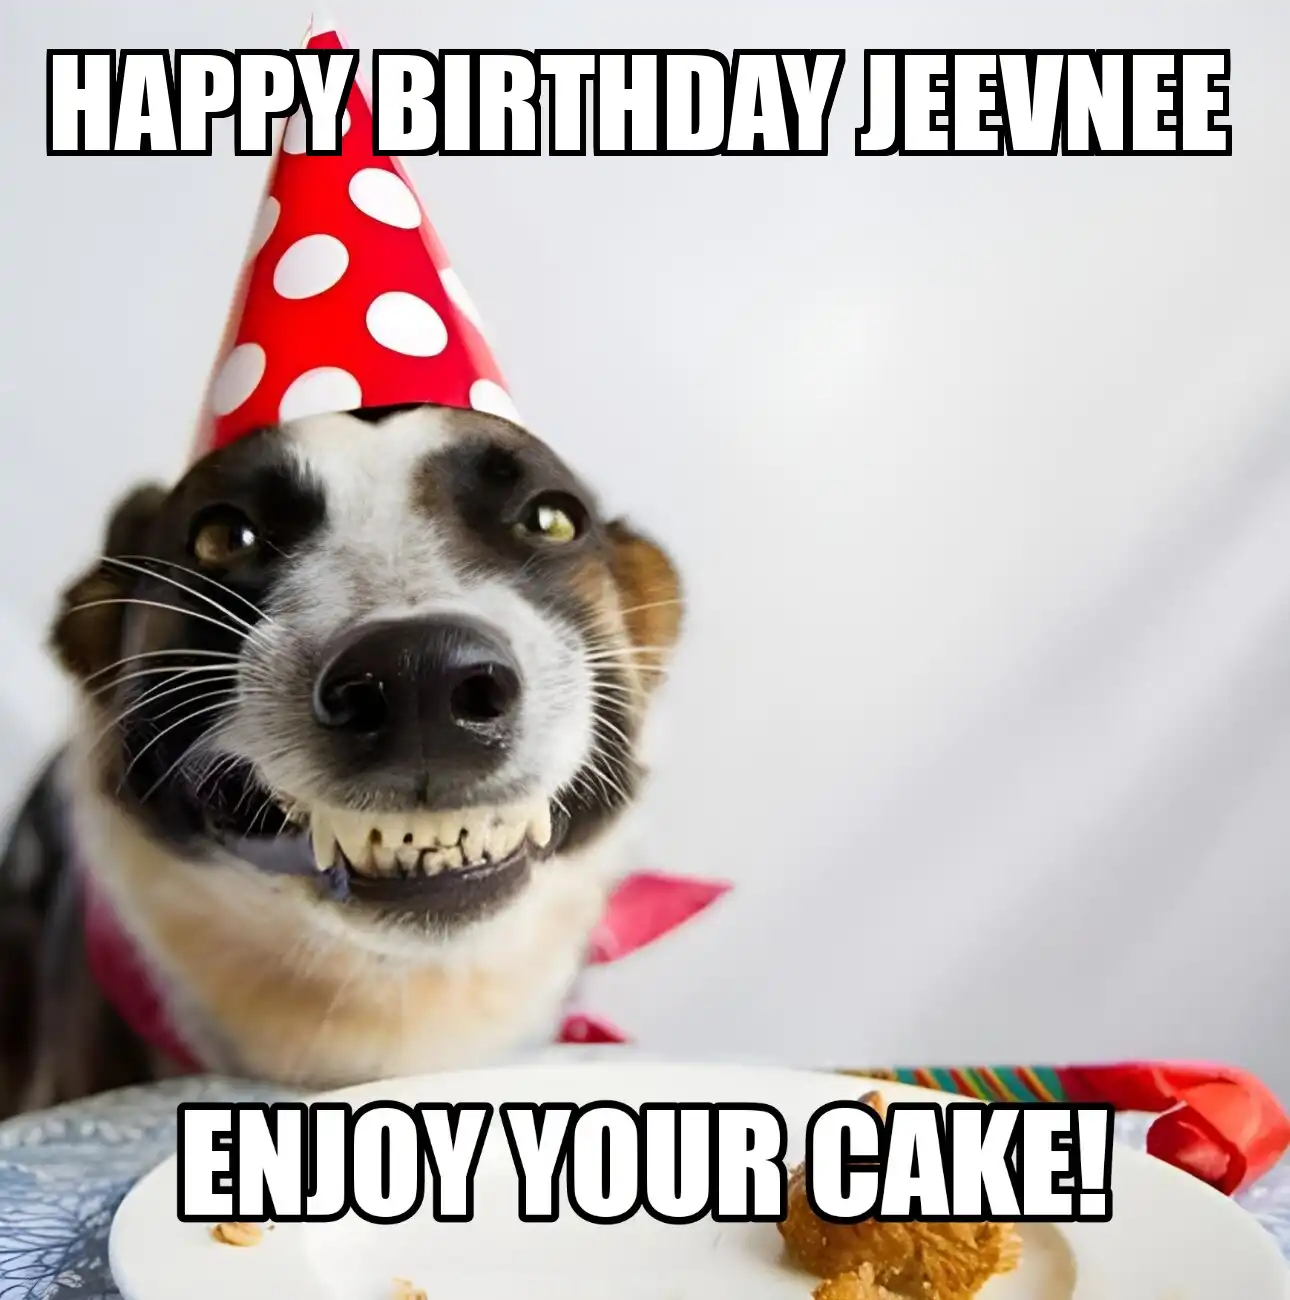 Happy Birthday Jeevnee Enjoy Your Cake Dog Meme